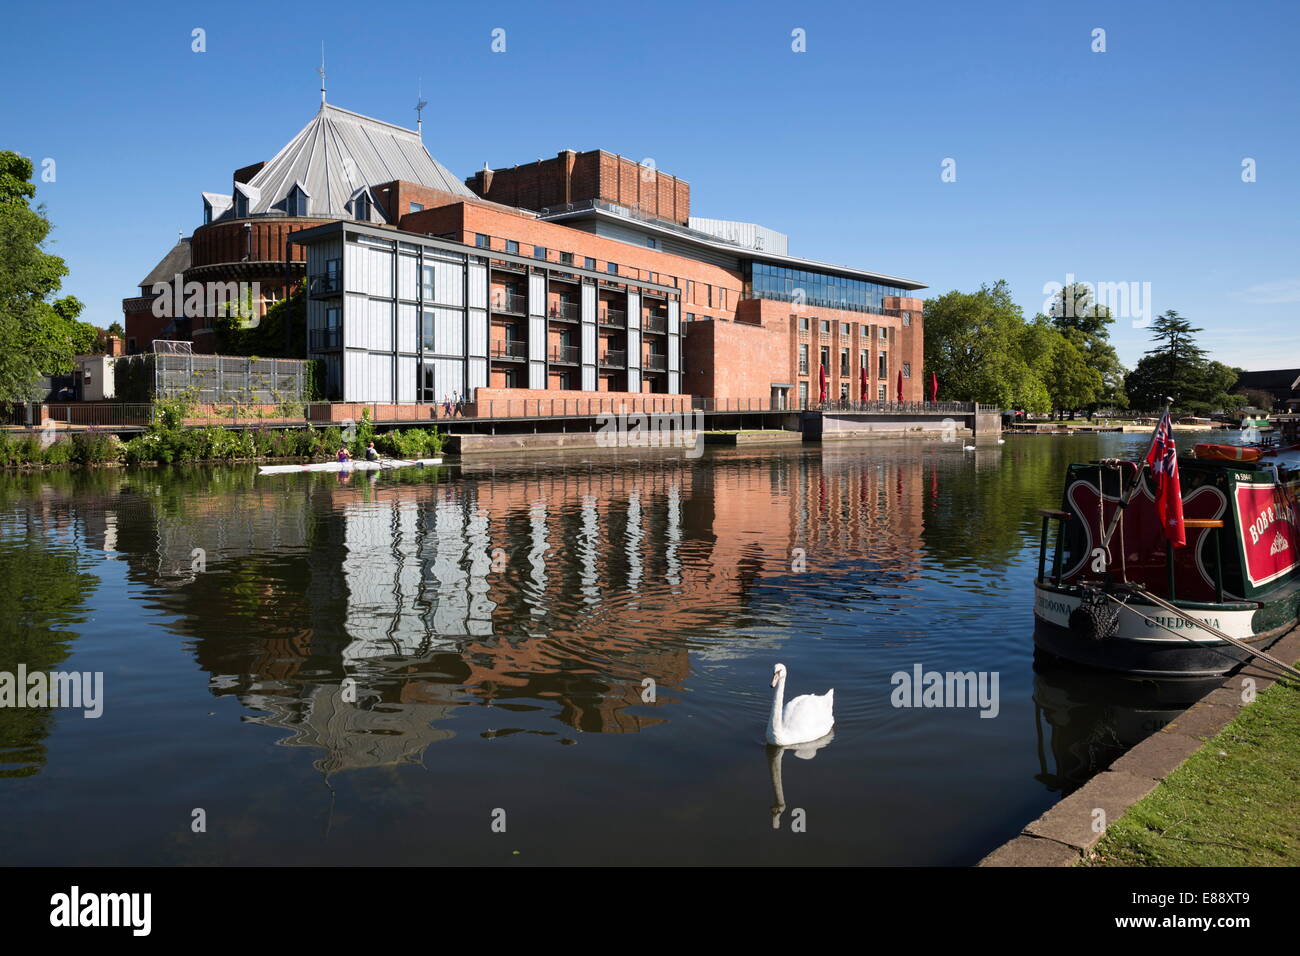 The Swan Theatre and Royal Shakespeare Theatre on River Avon, Stratford-upon-Avon, Warwickshire, England, United Kingdom, Europe Stock Photo